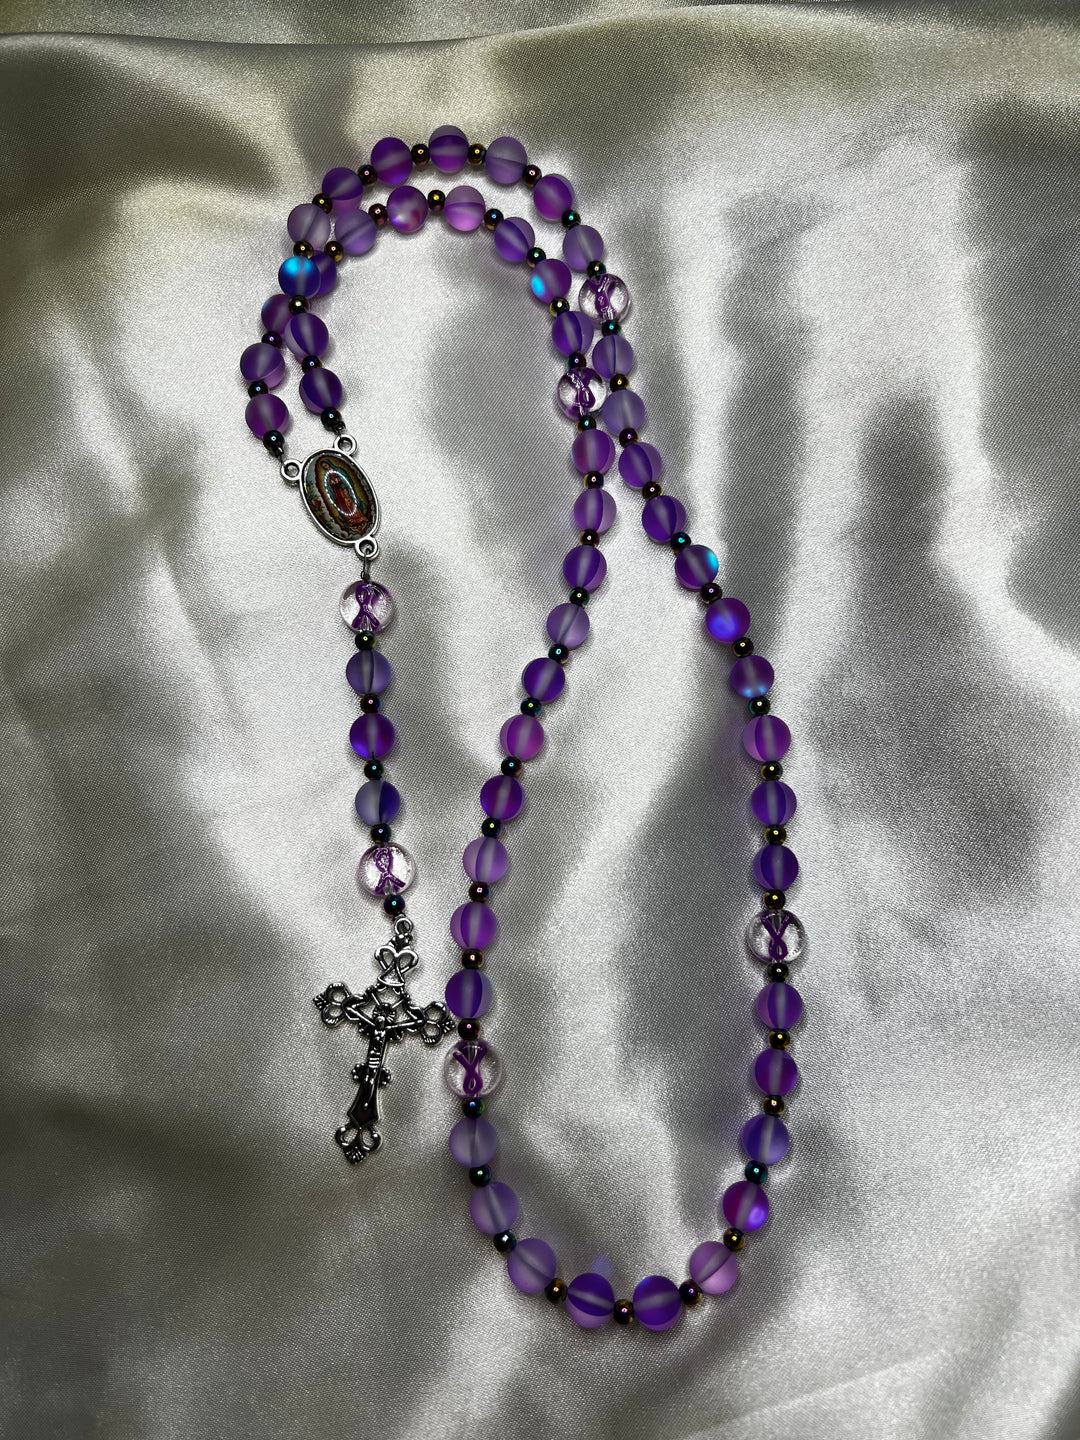 Cancer Survivor Rosary